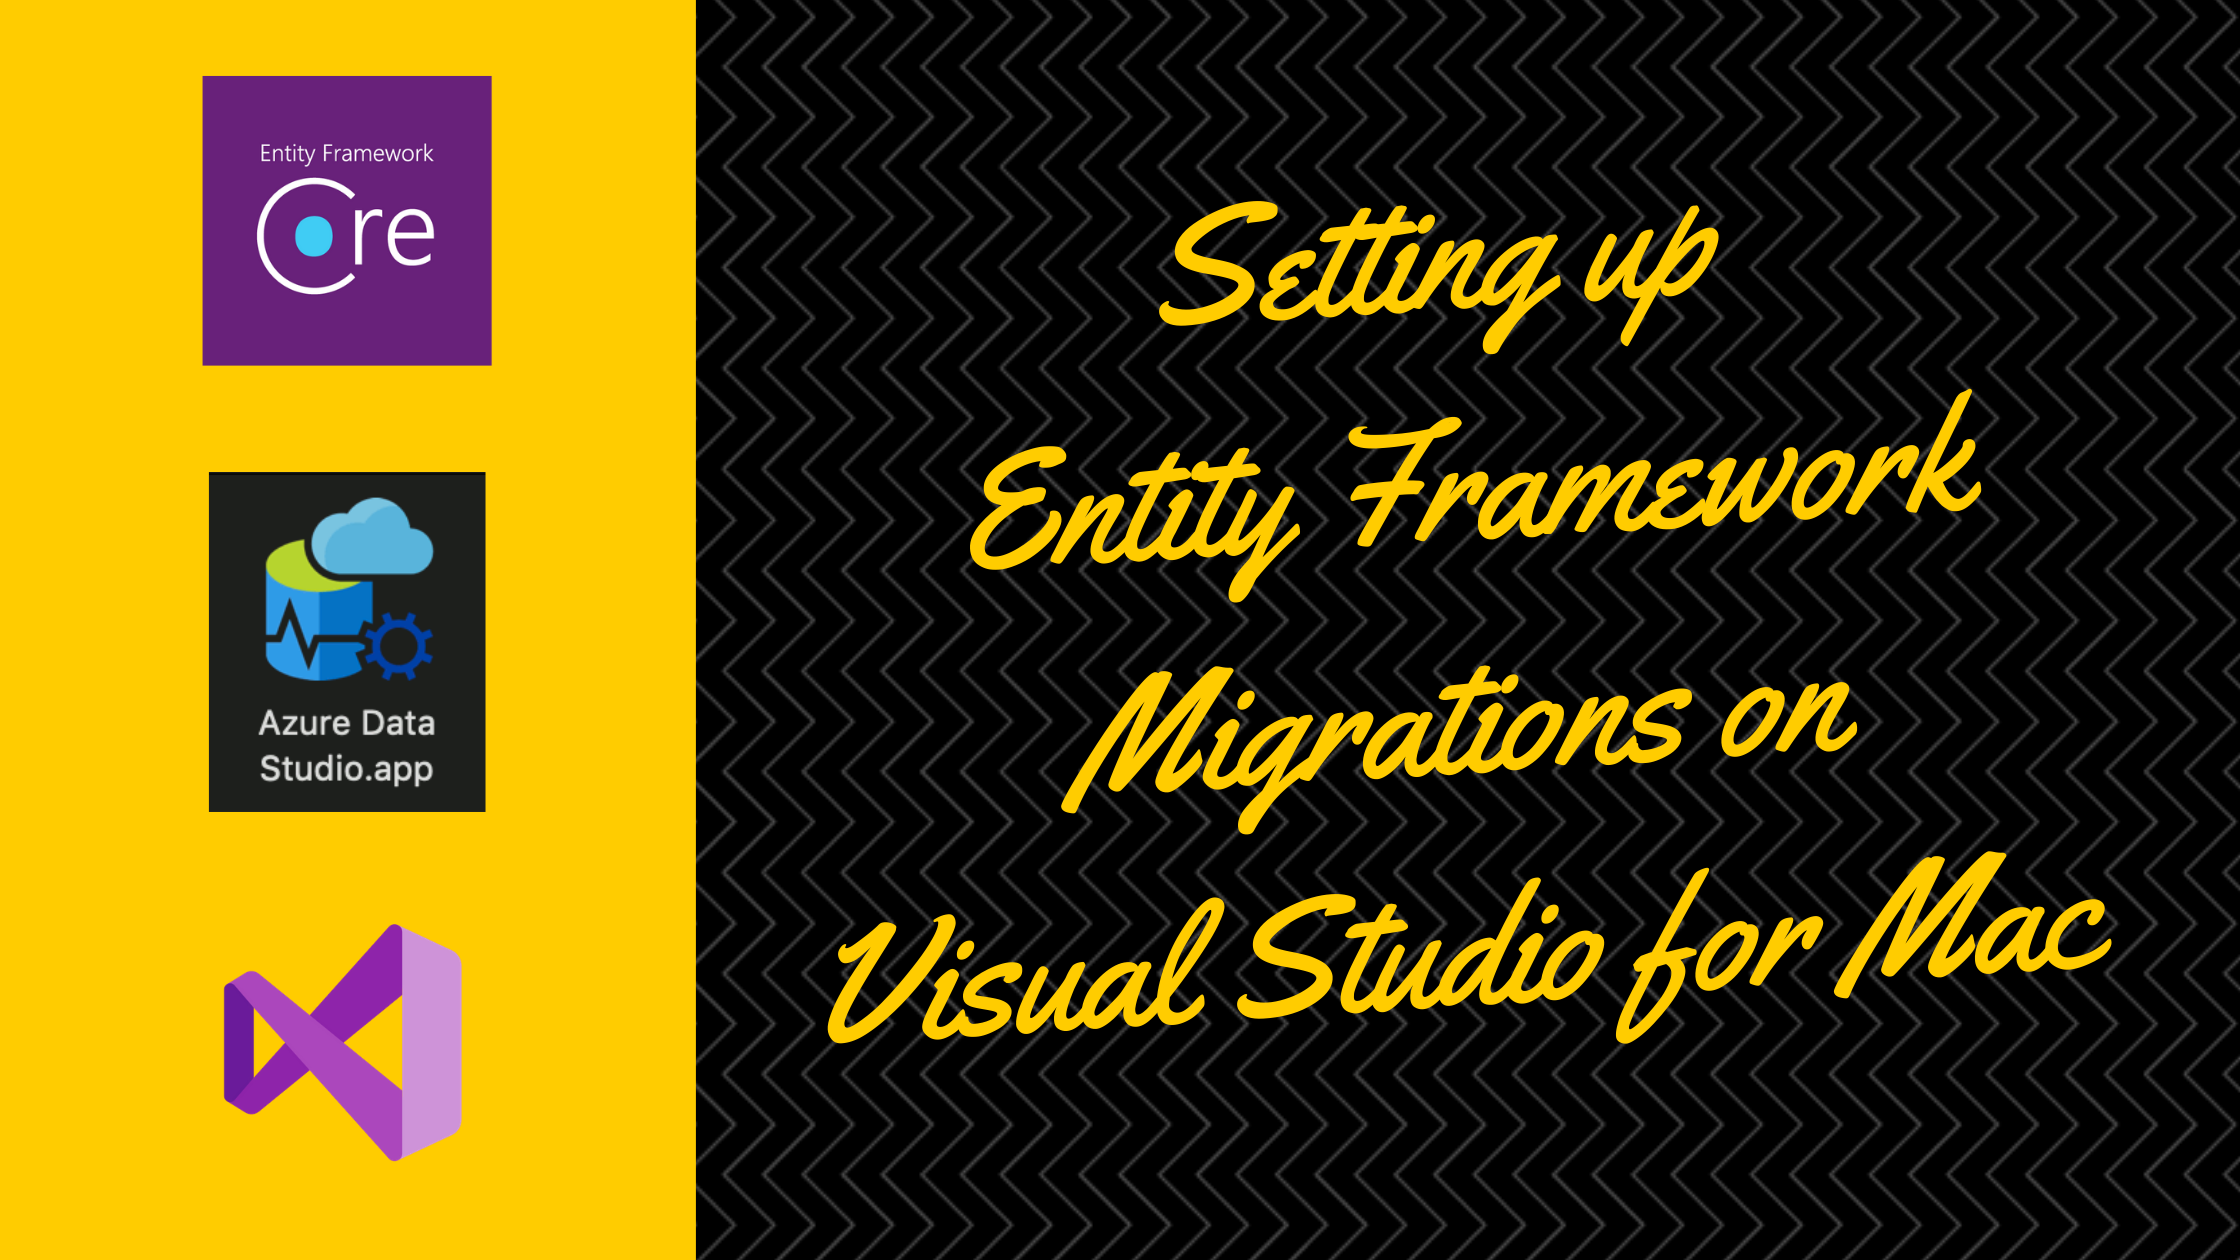 visual studio for mac entity framework code first